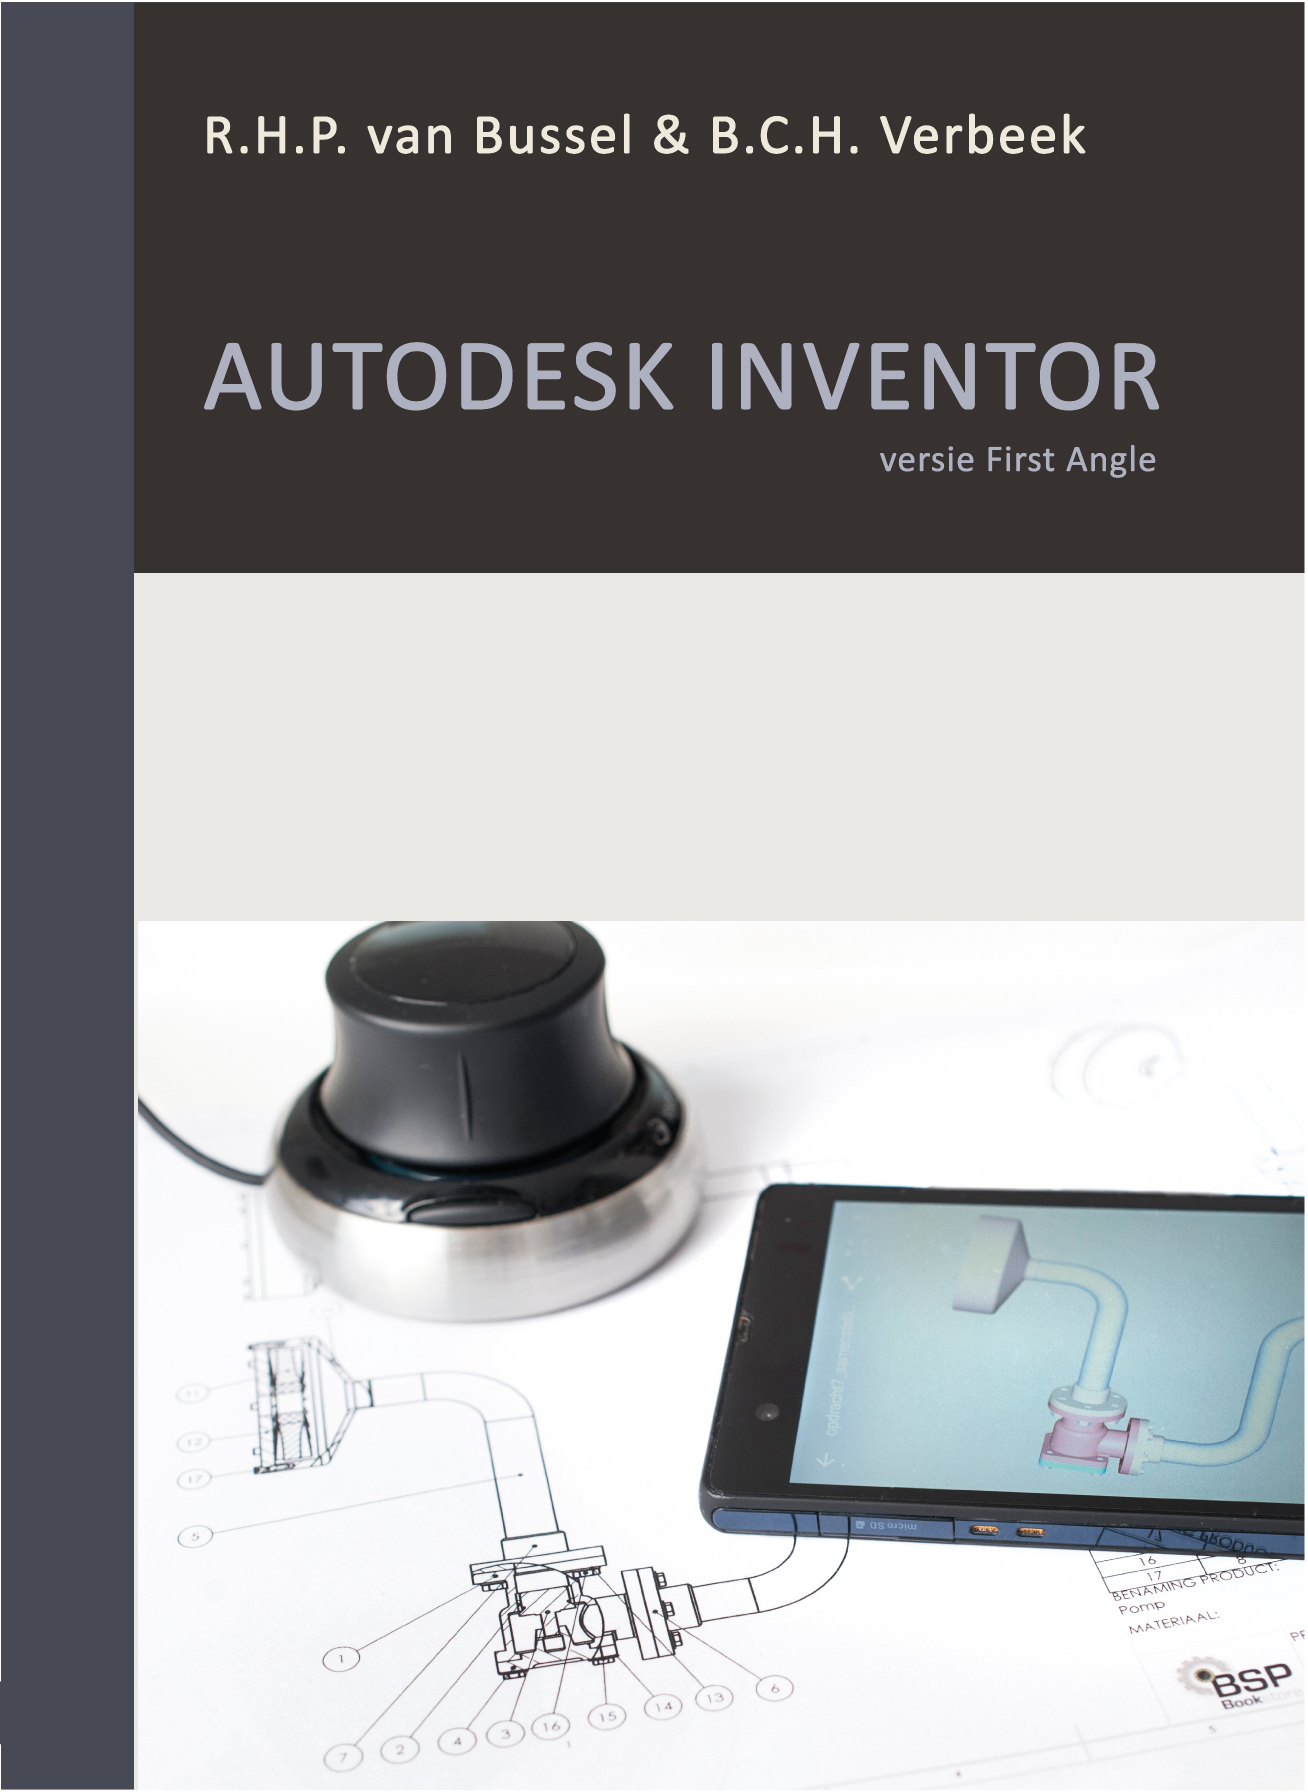 Autodesk Inventor basis's thumbnail image